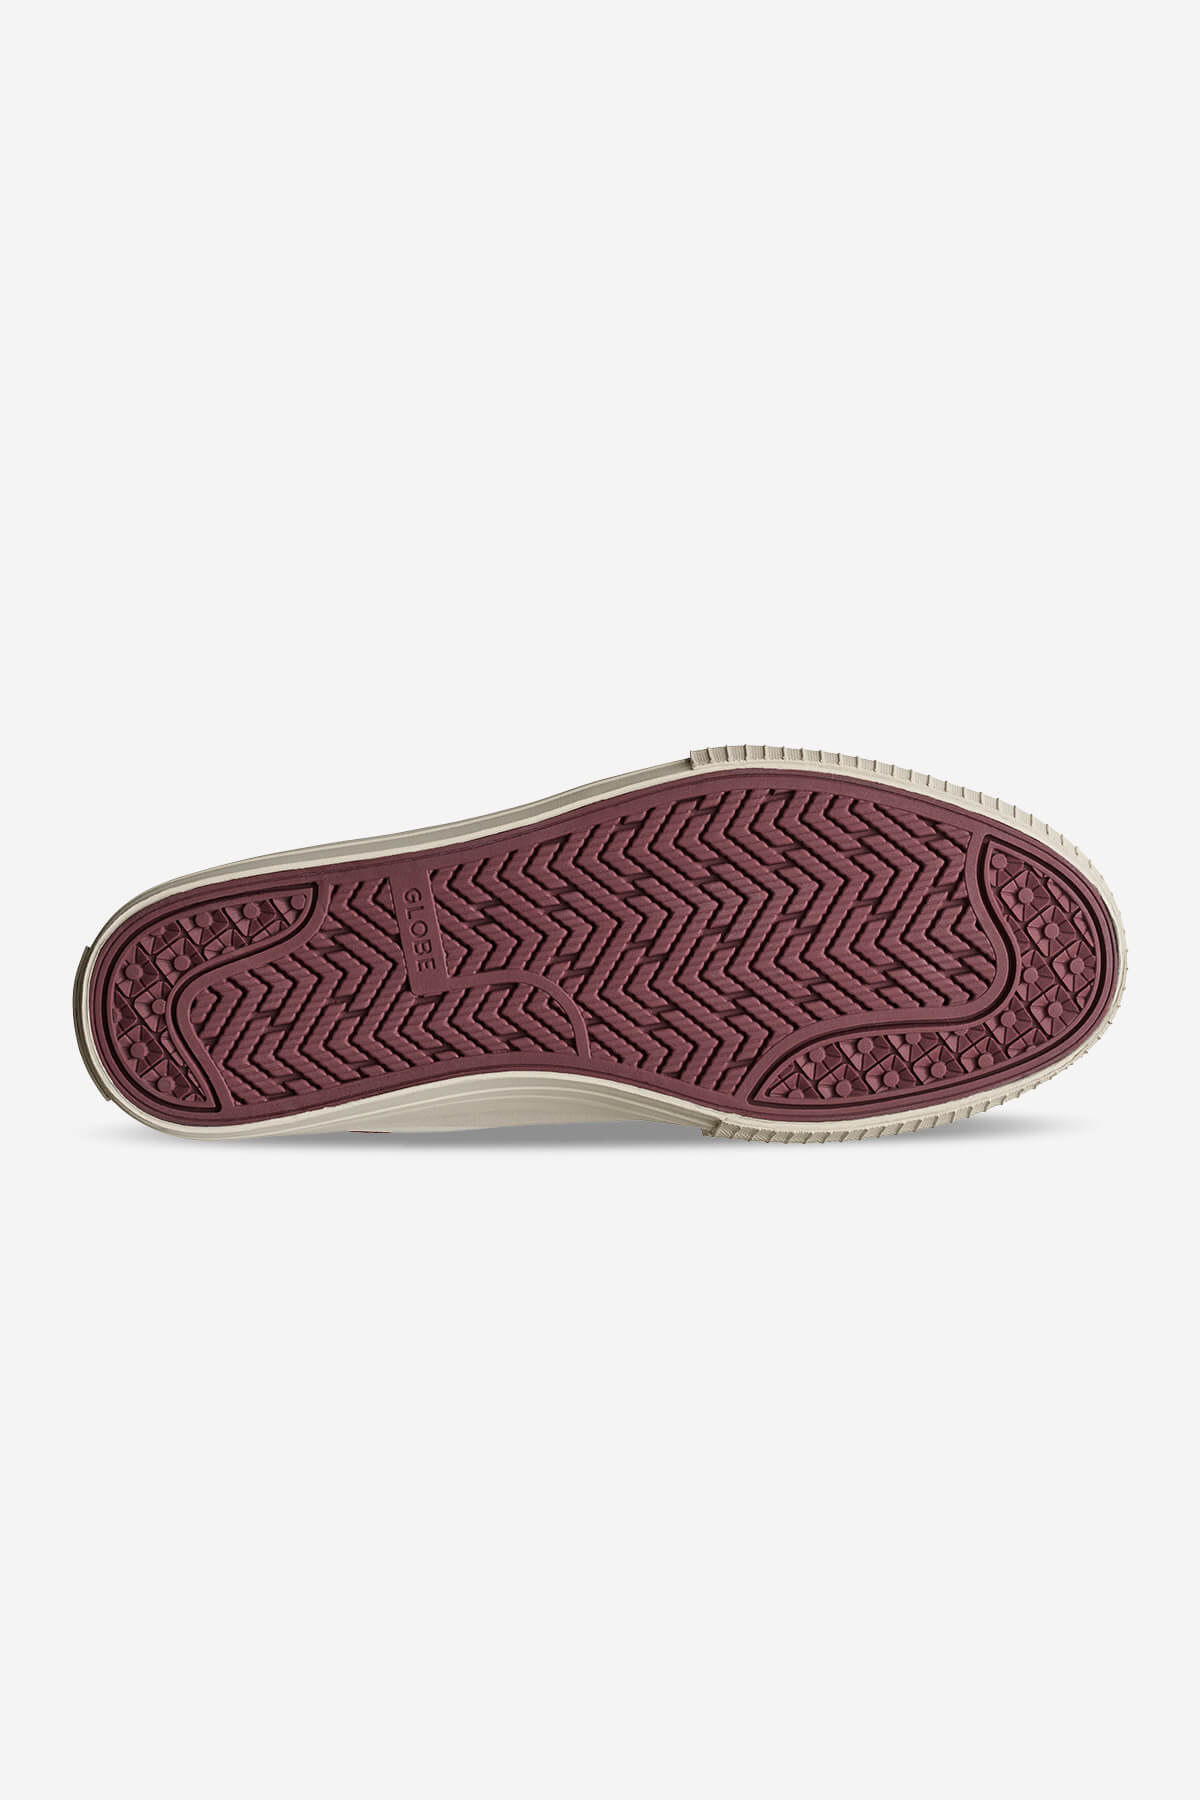 Globe - Gillette - Cream/Pomegranate - Skate Shoes